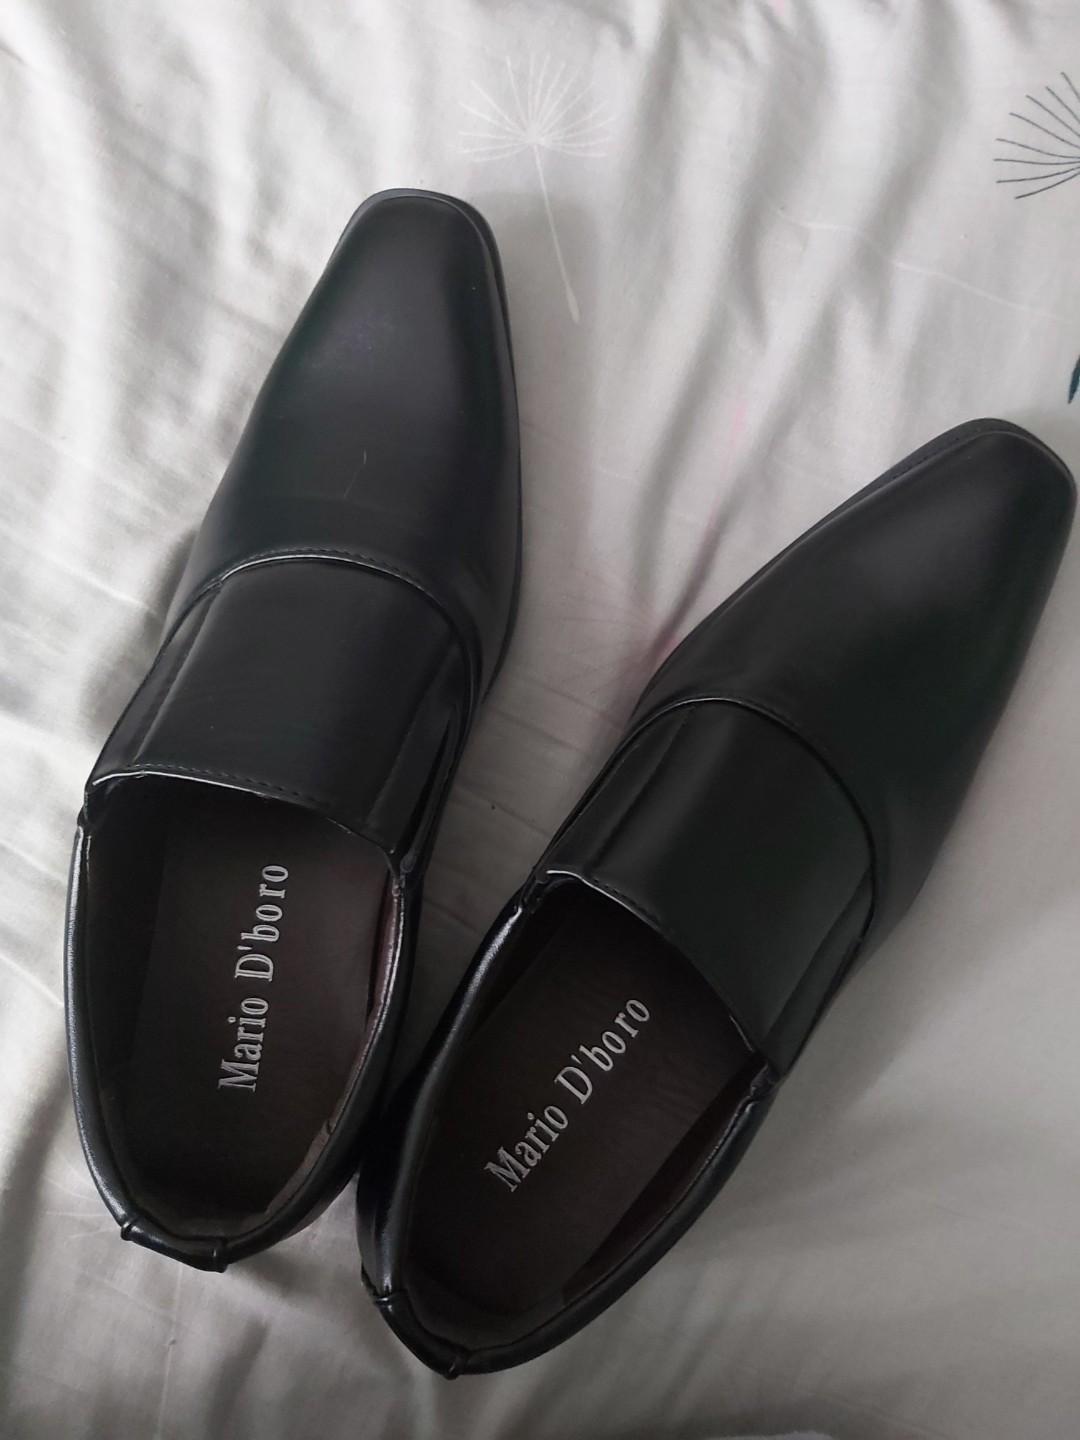 mario de boro black shoes price